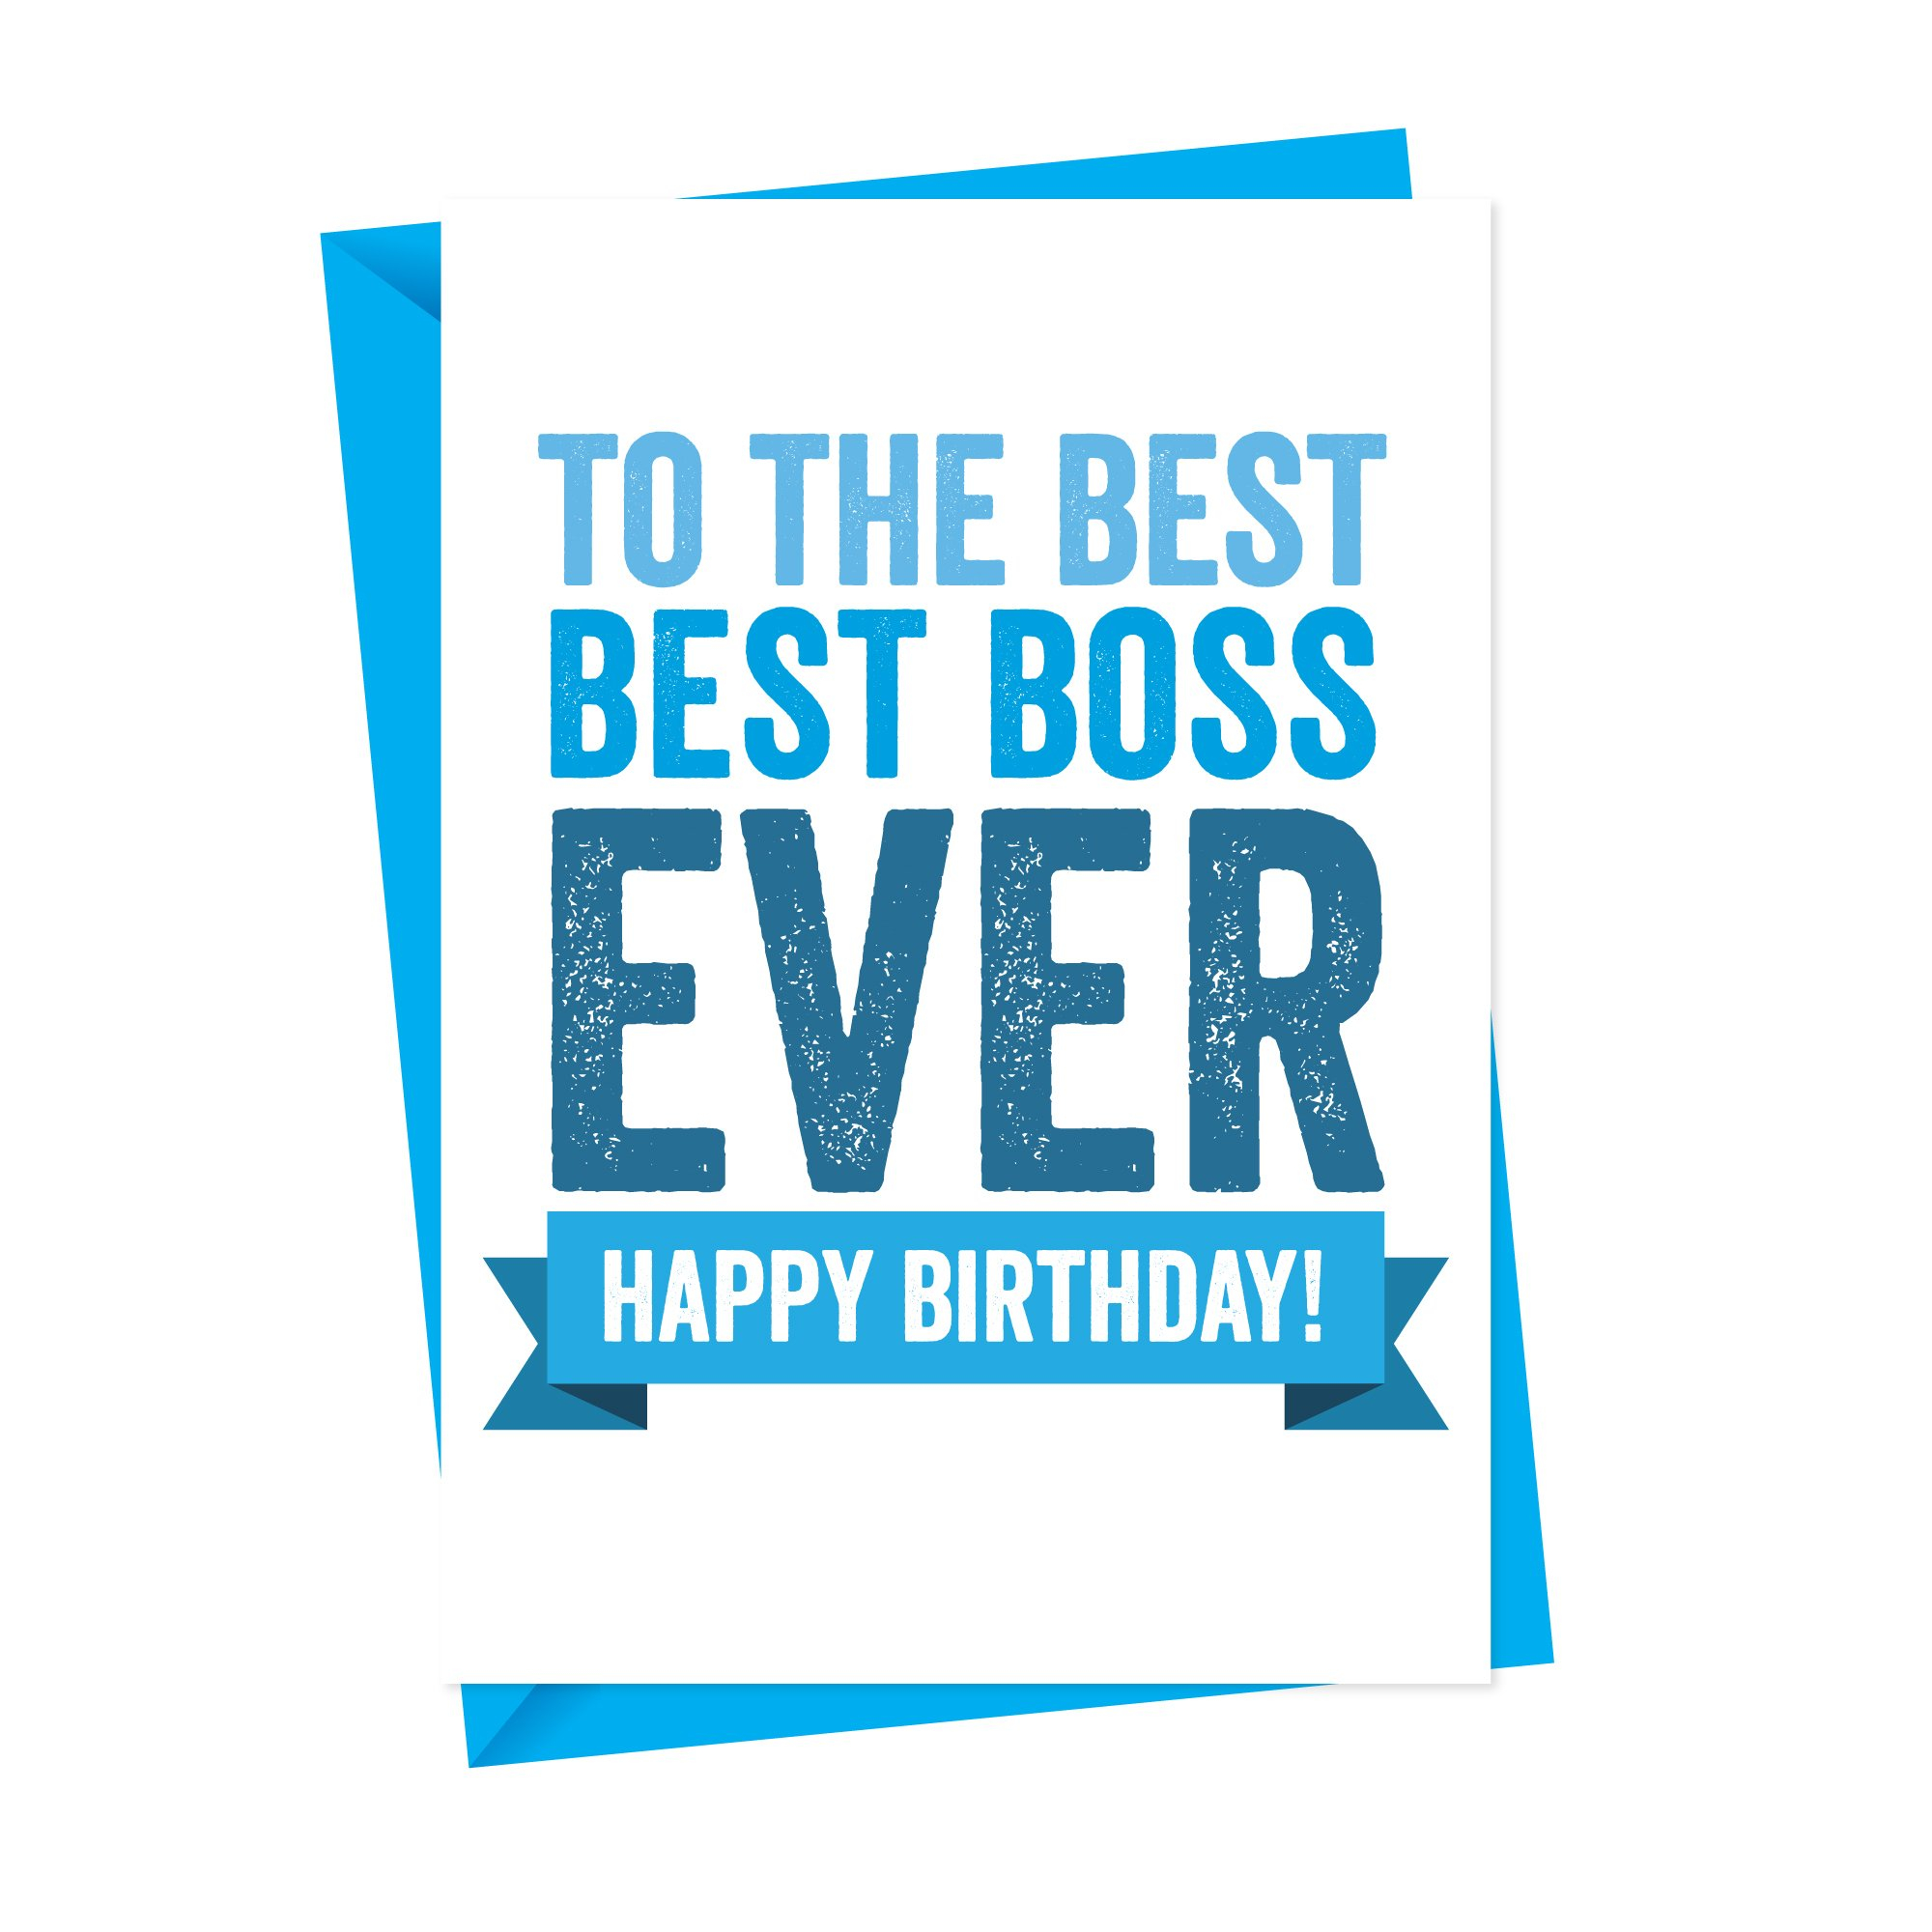 Best Boss Birthday Card Birthday Card Greetings Card 